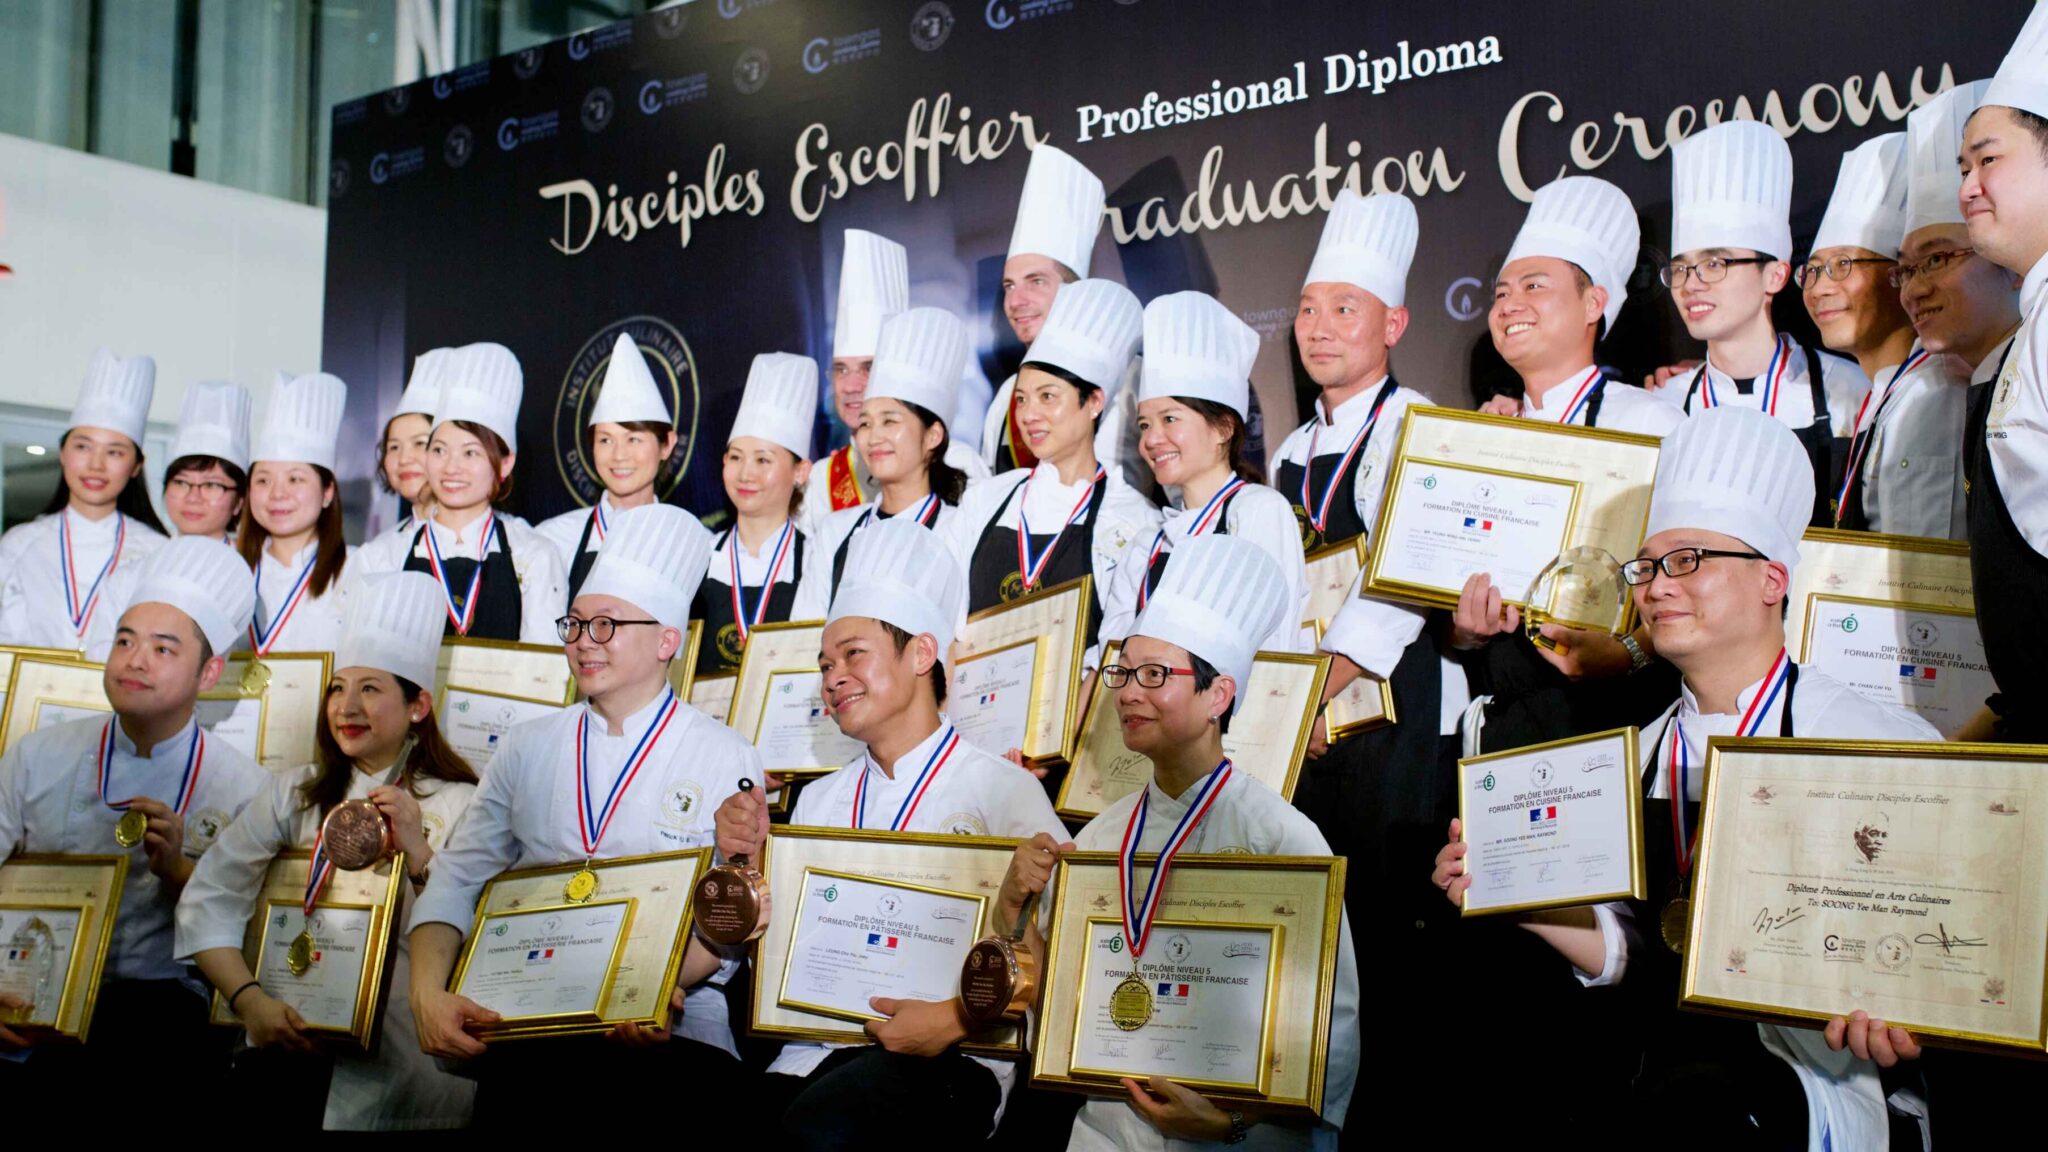 Diploma Graduation Ceremony